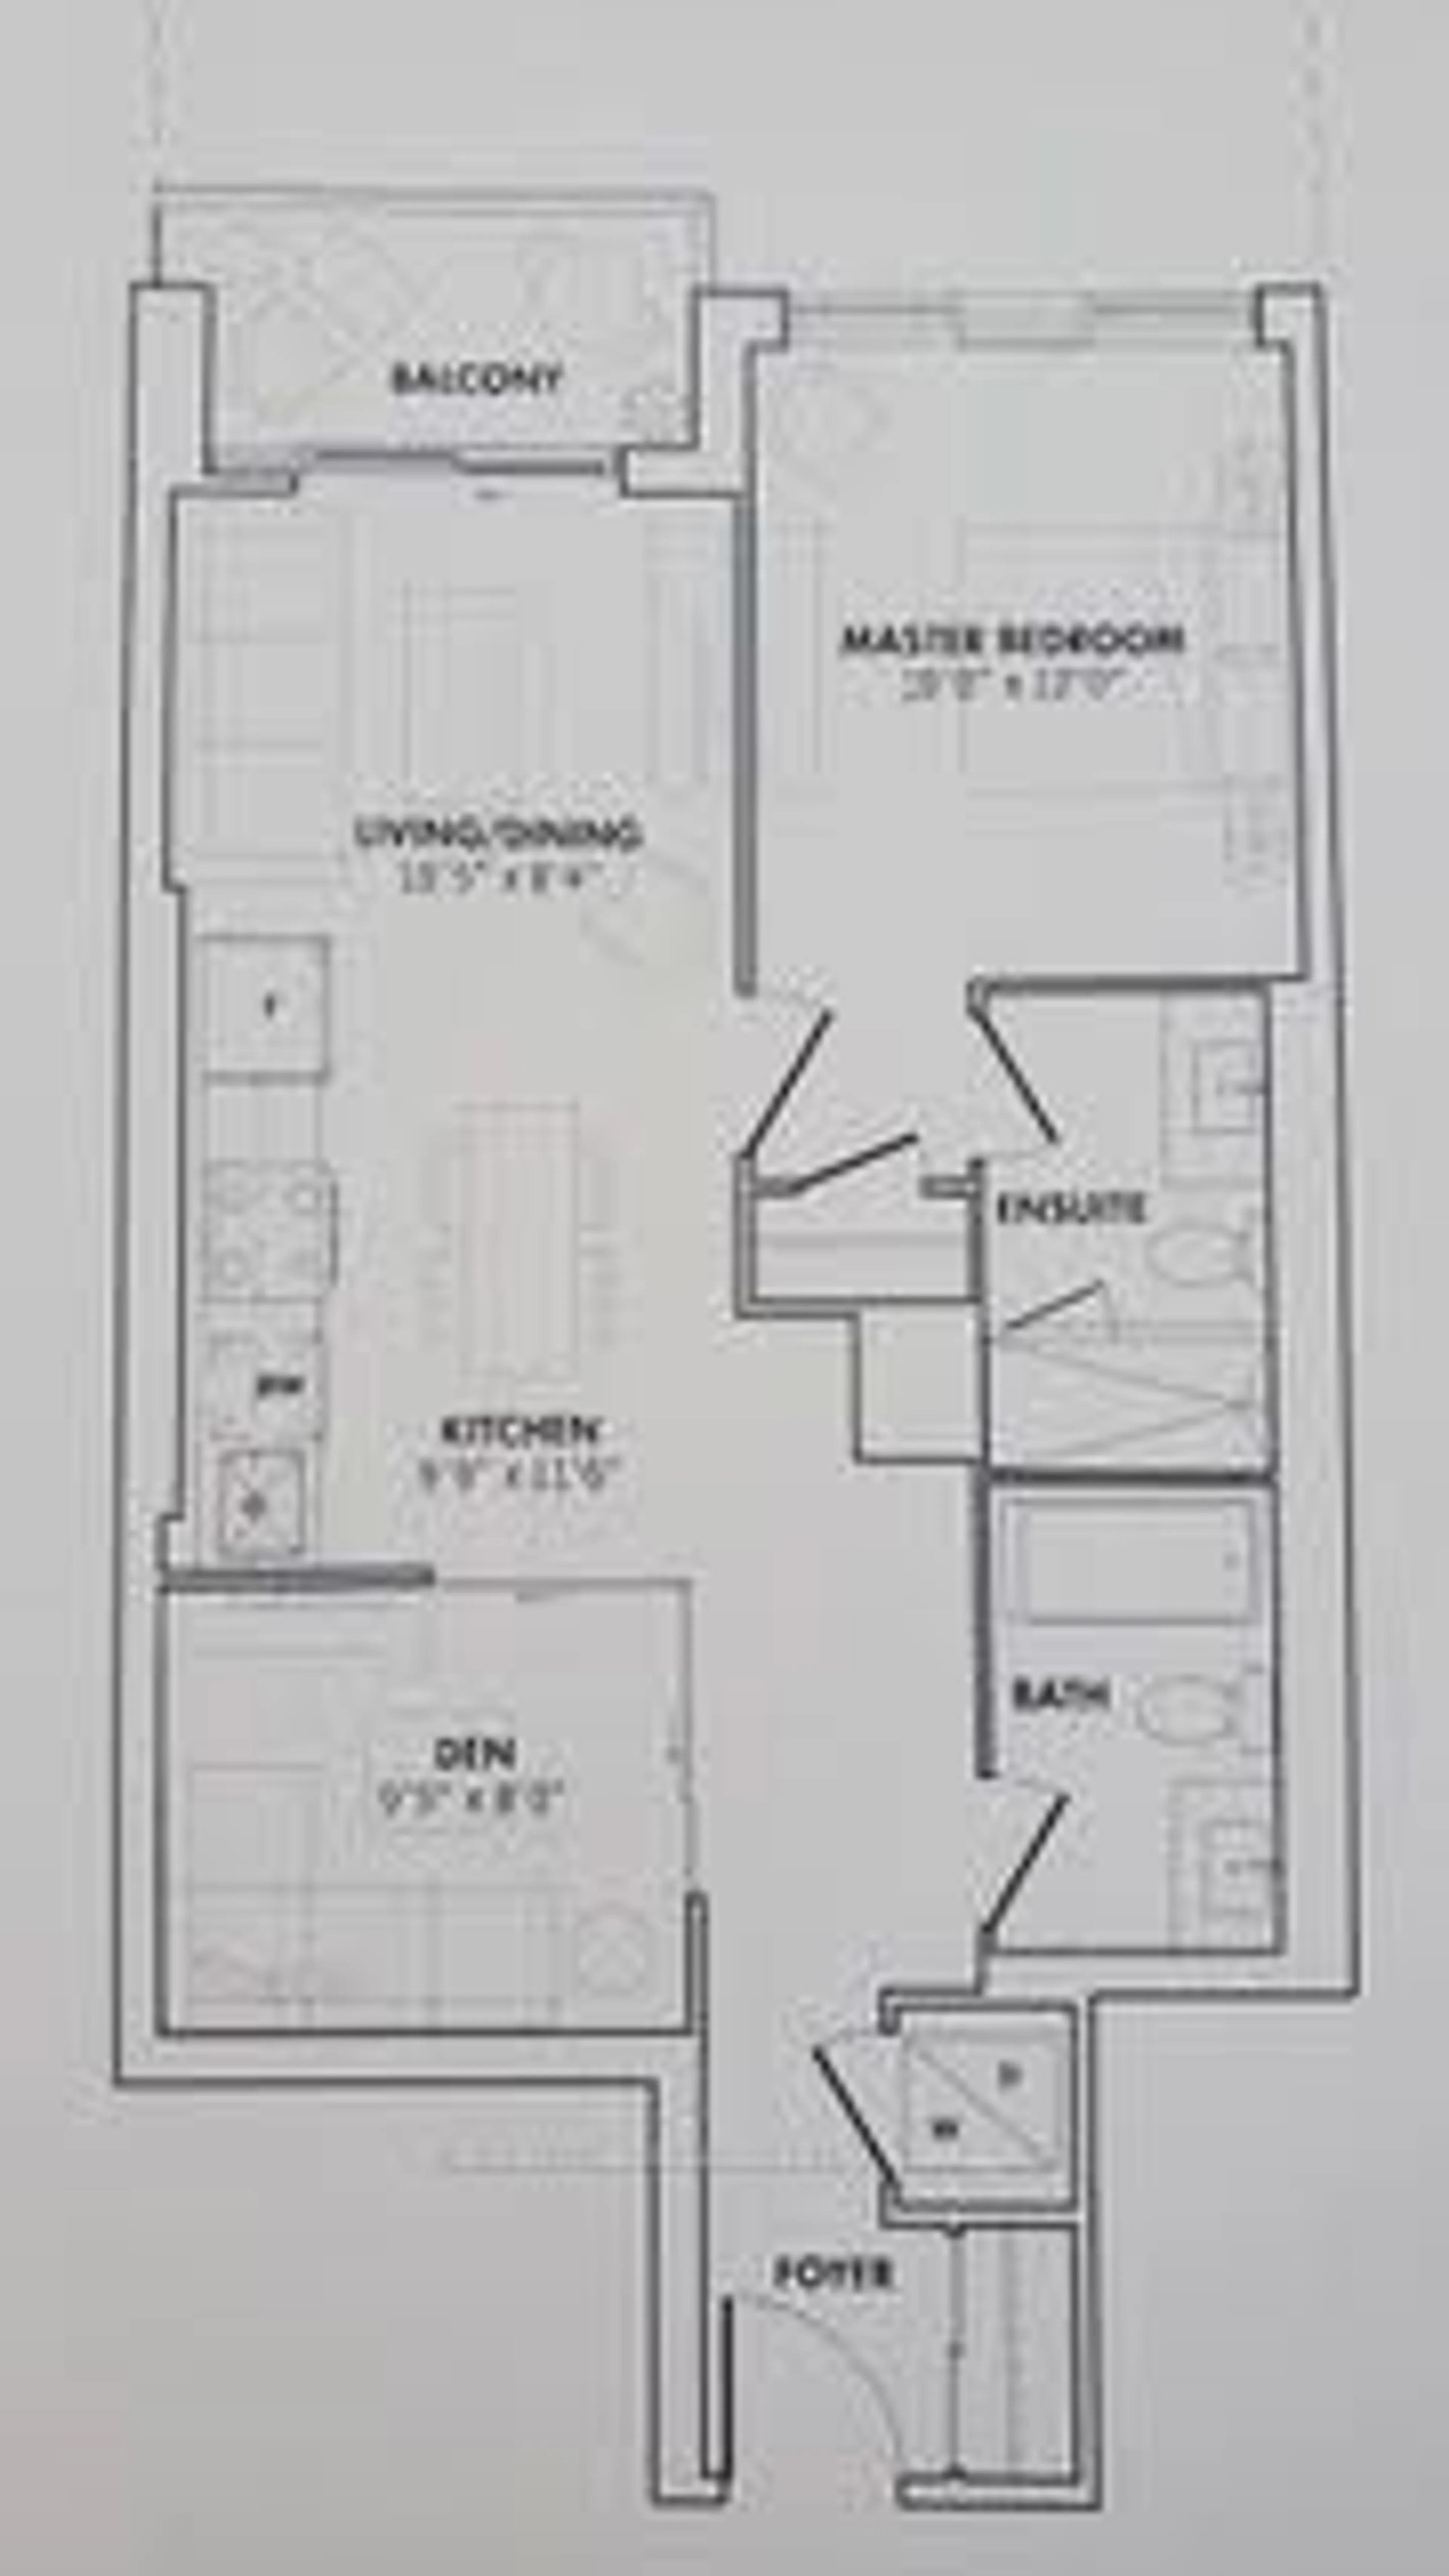 Floor plan for 385 Winston Rd #1012, Grimsby Ontario L3M 4E8